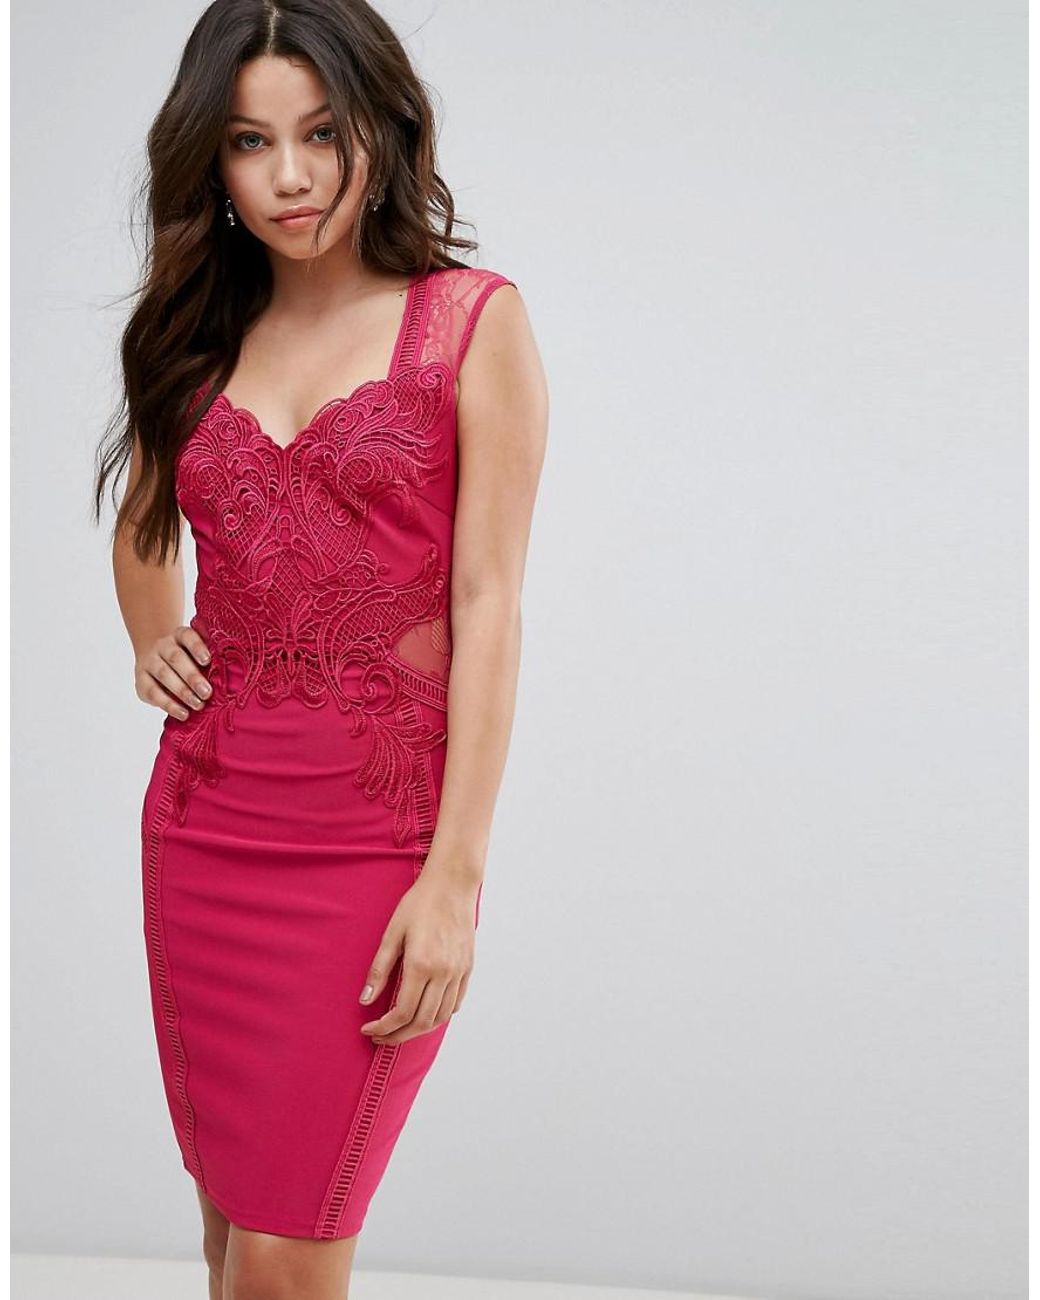 Lipsy Love Michelle Keegan Applique Bodycon Dress in Pink | Lyst